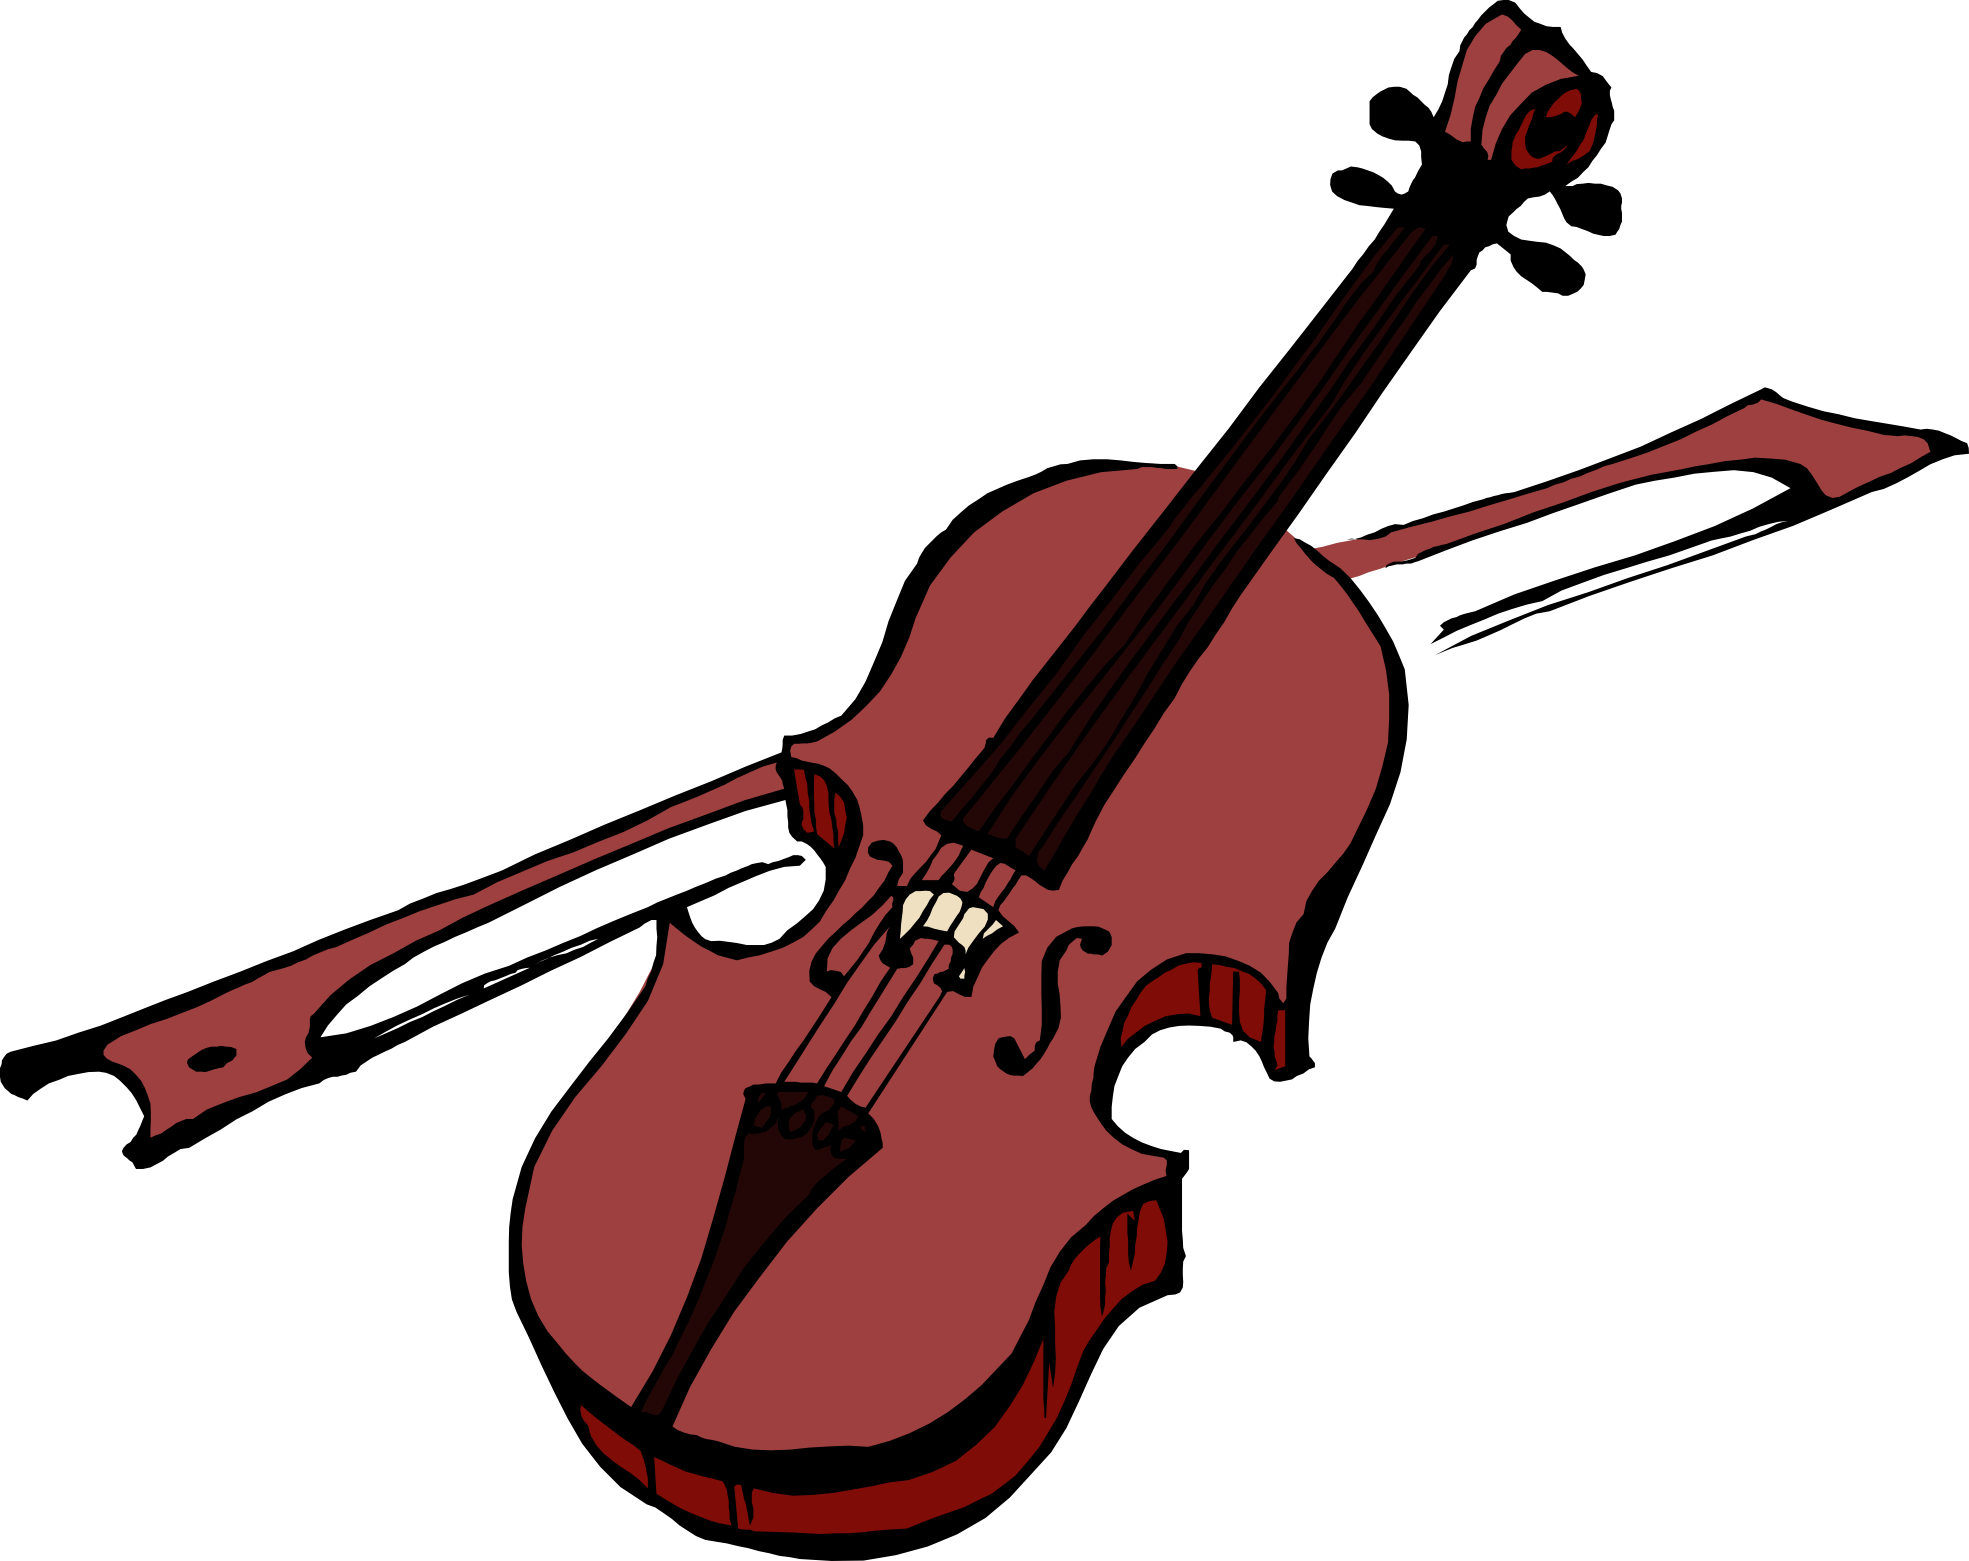 Violin clipart #10, Download drawings